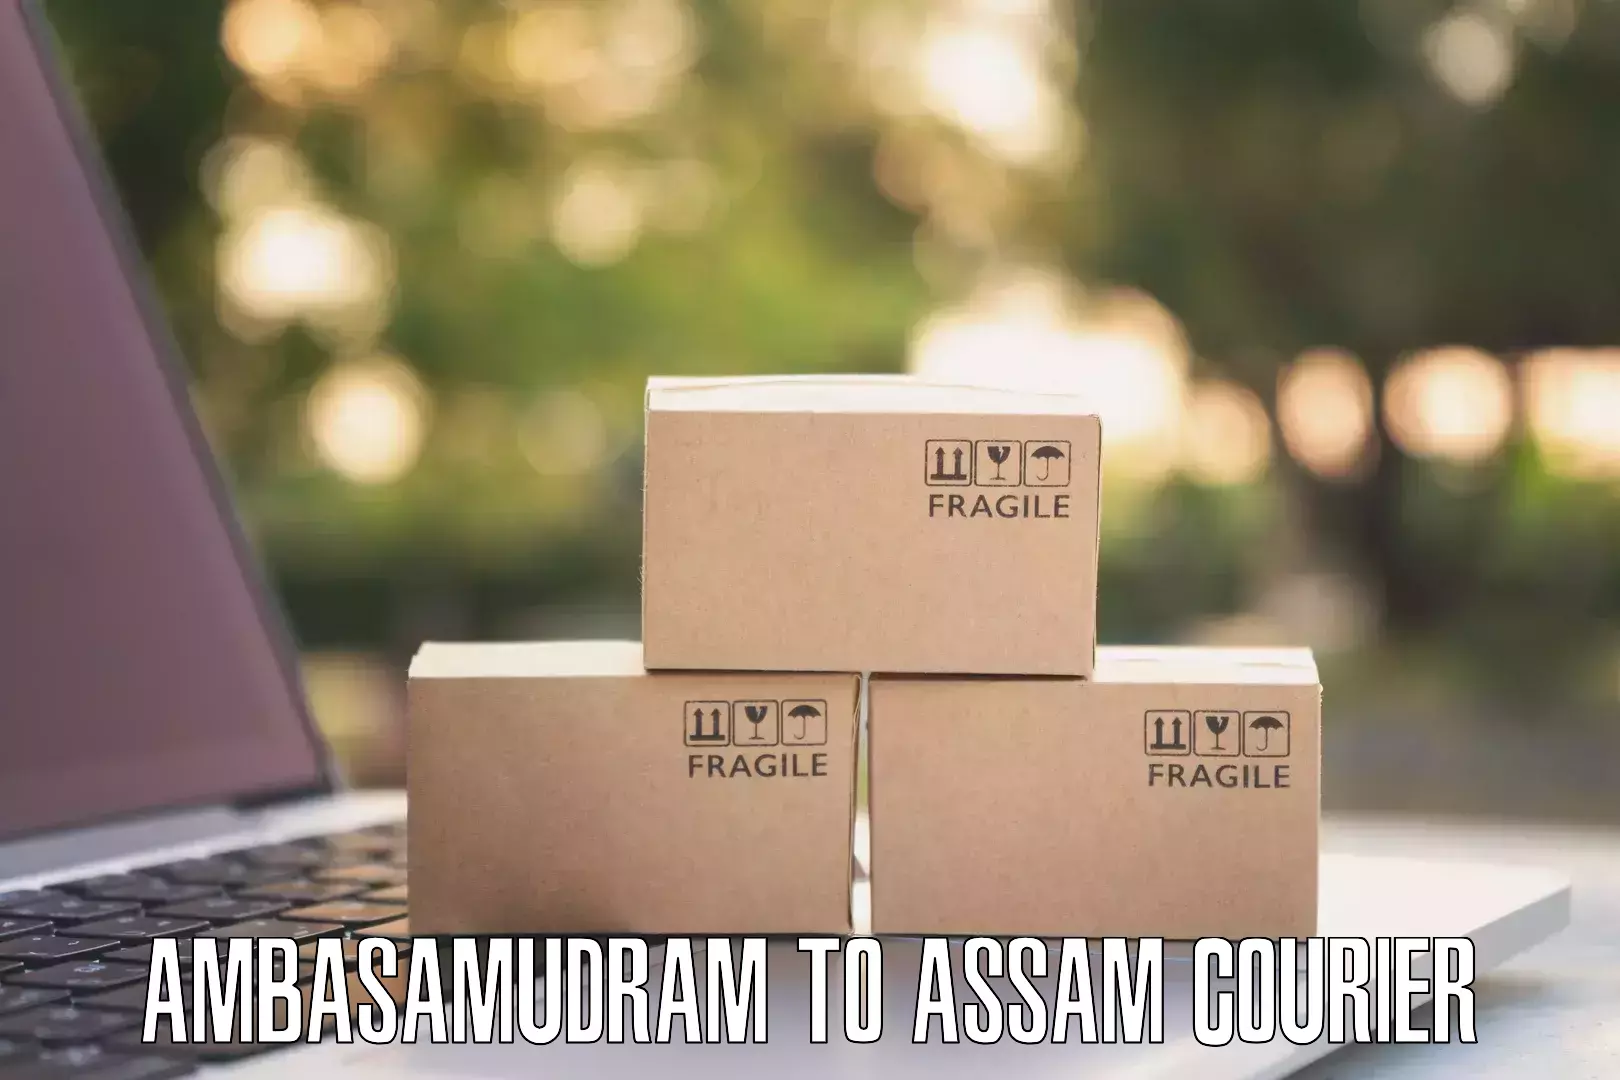 Courier service comparison Ambasamudram to Assam